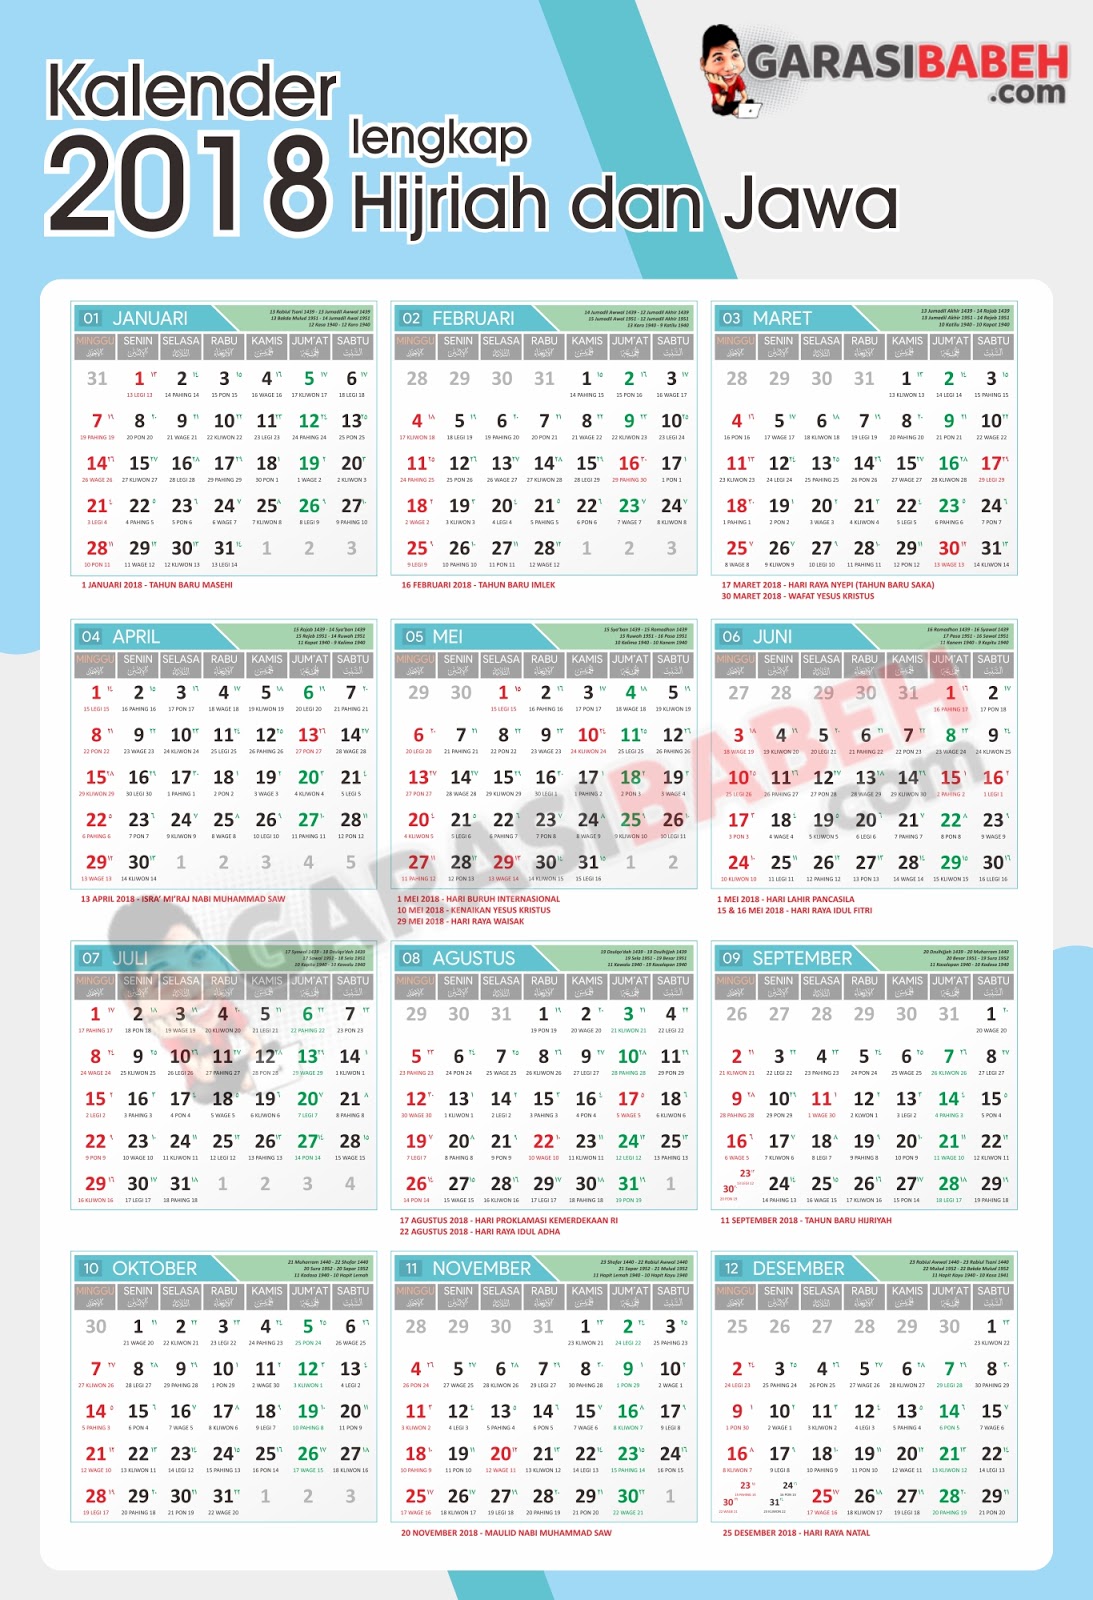 Template Kalender 2018 Lengkap Hijriyah Dan Jawa Libur Coreldraw Cdr